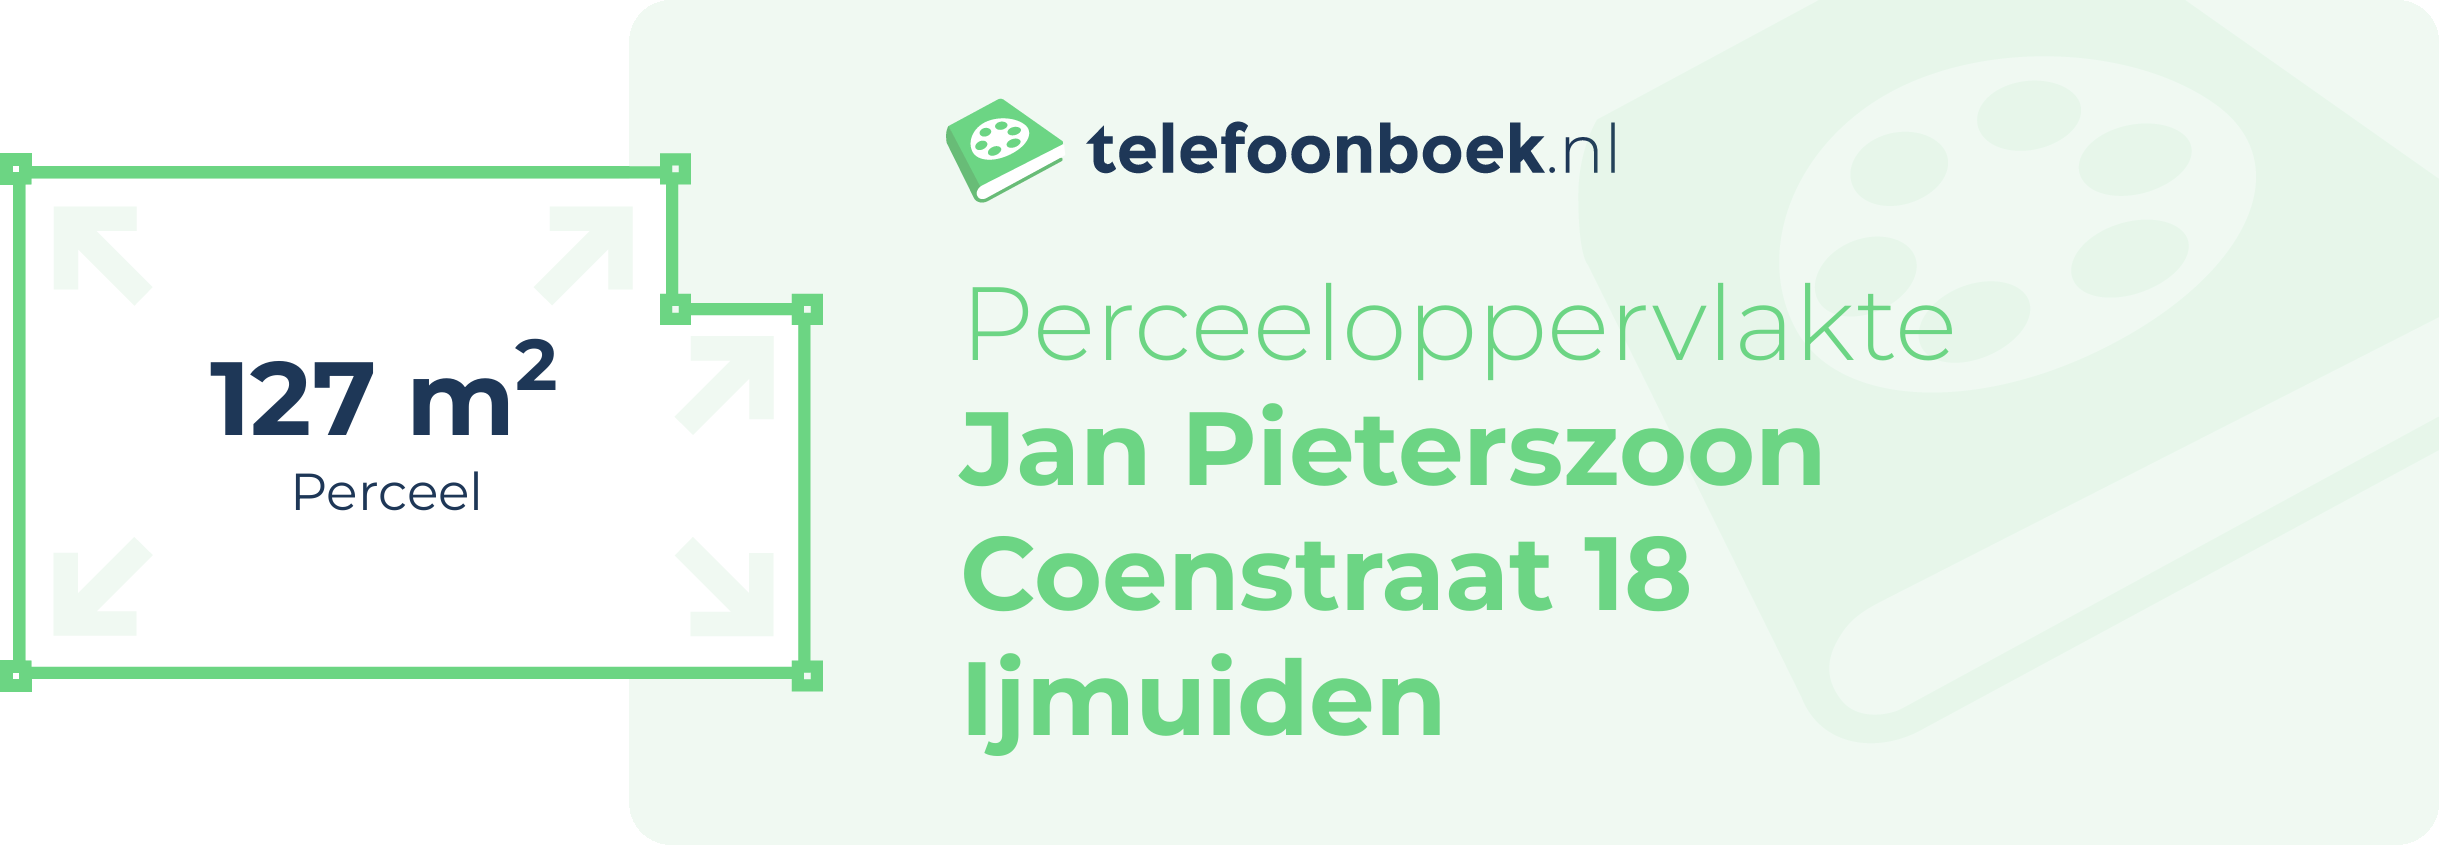 Perceeloppervlakte Jan Pieterszoon Coenstraat 18 Ijmuiden